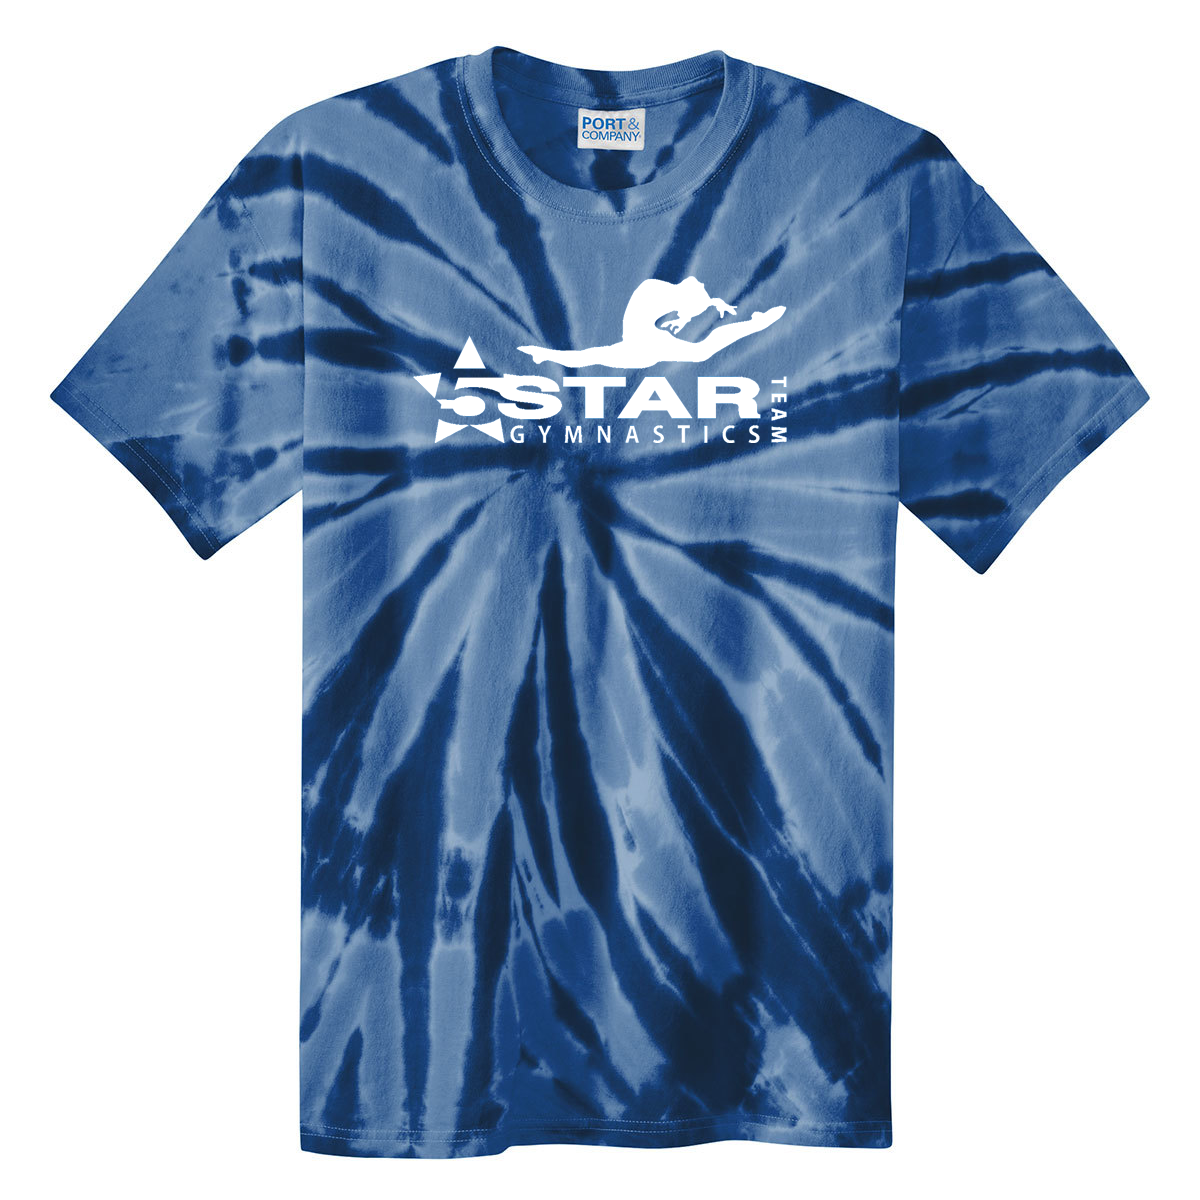 5 Star Gymnastics Tie Dye T-Shirt